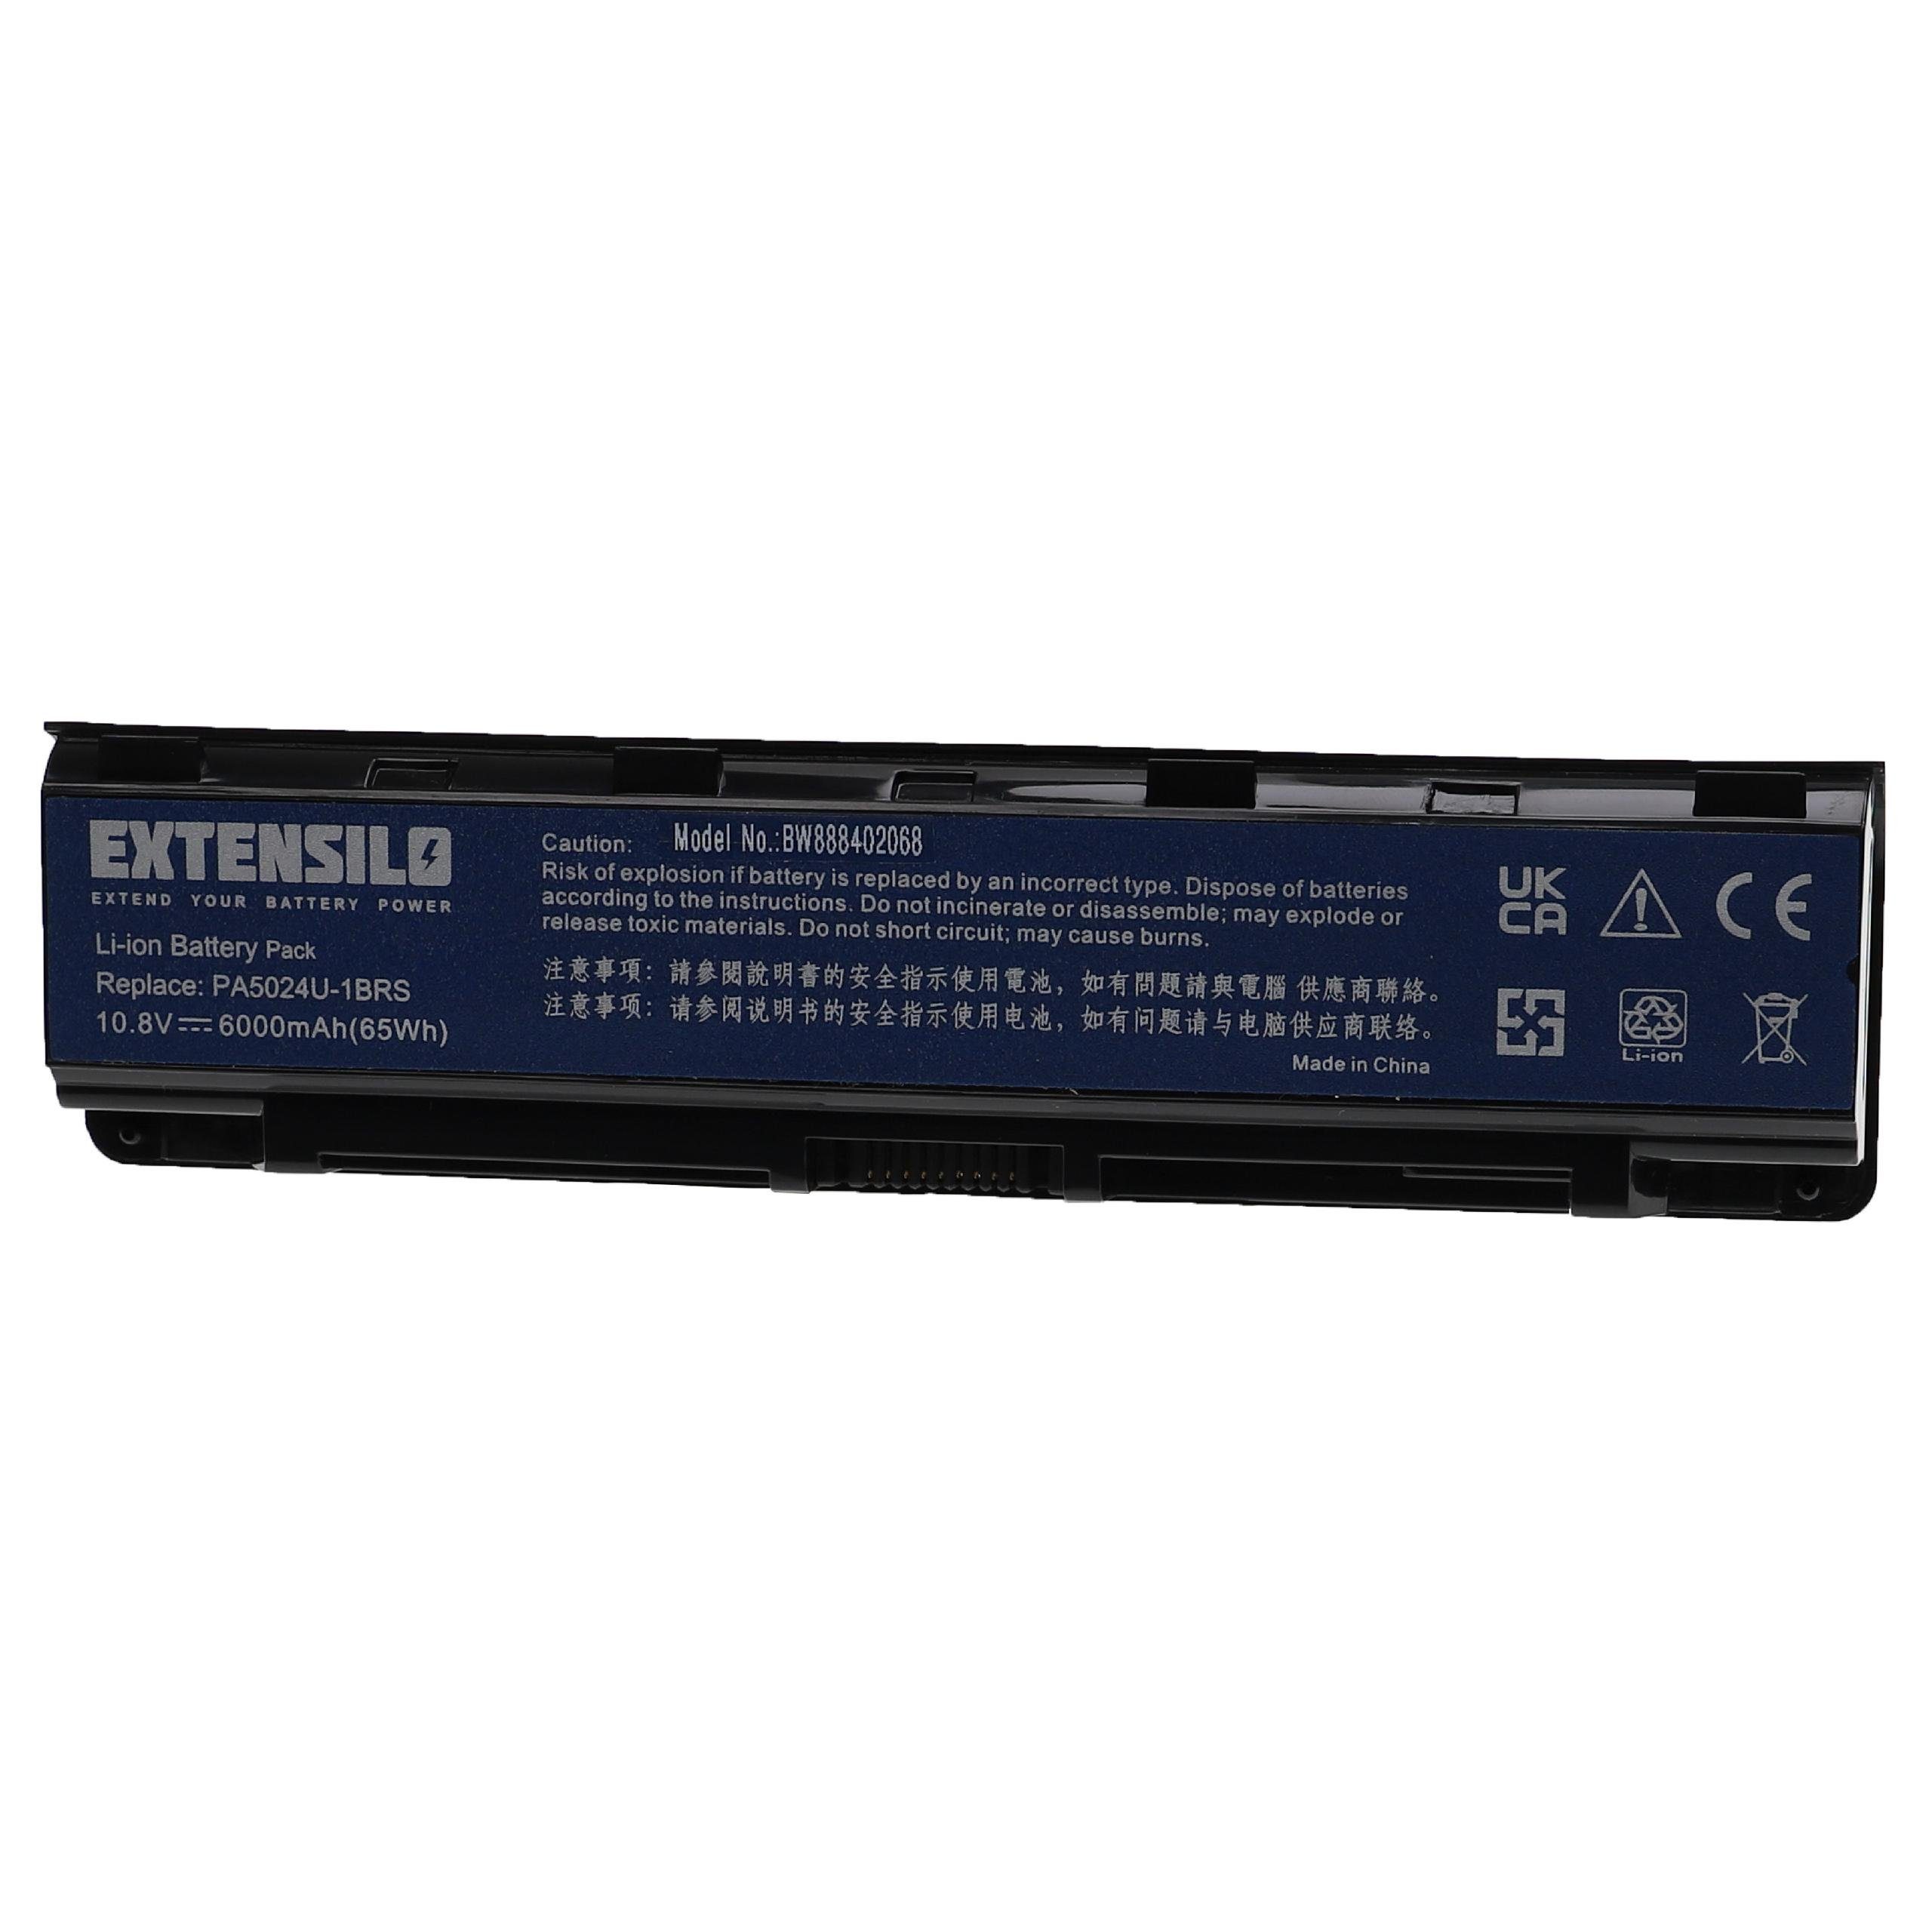 Extensilo kompatibel mit Toshiba Dynabook Qosmio T752, B352 Laptop-Akku Li-Ion 6000 mAh (10,8 V)